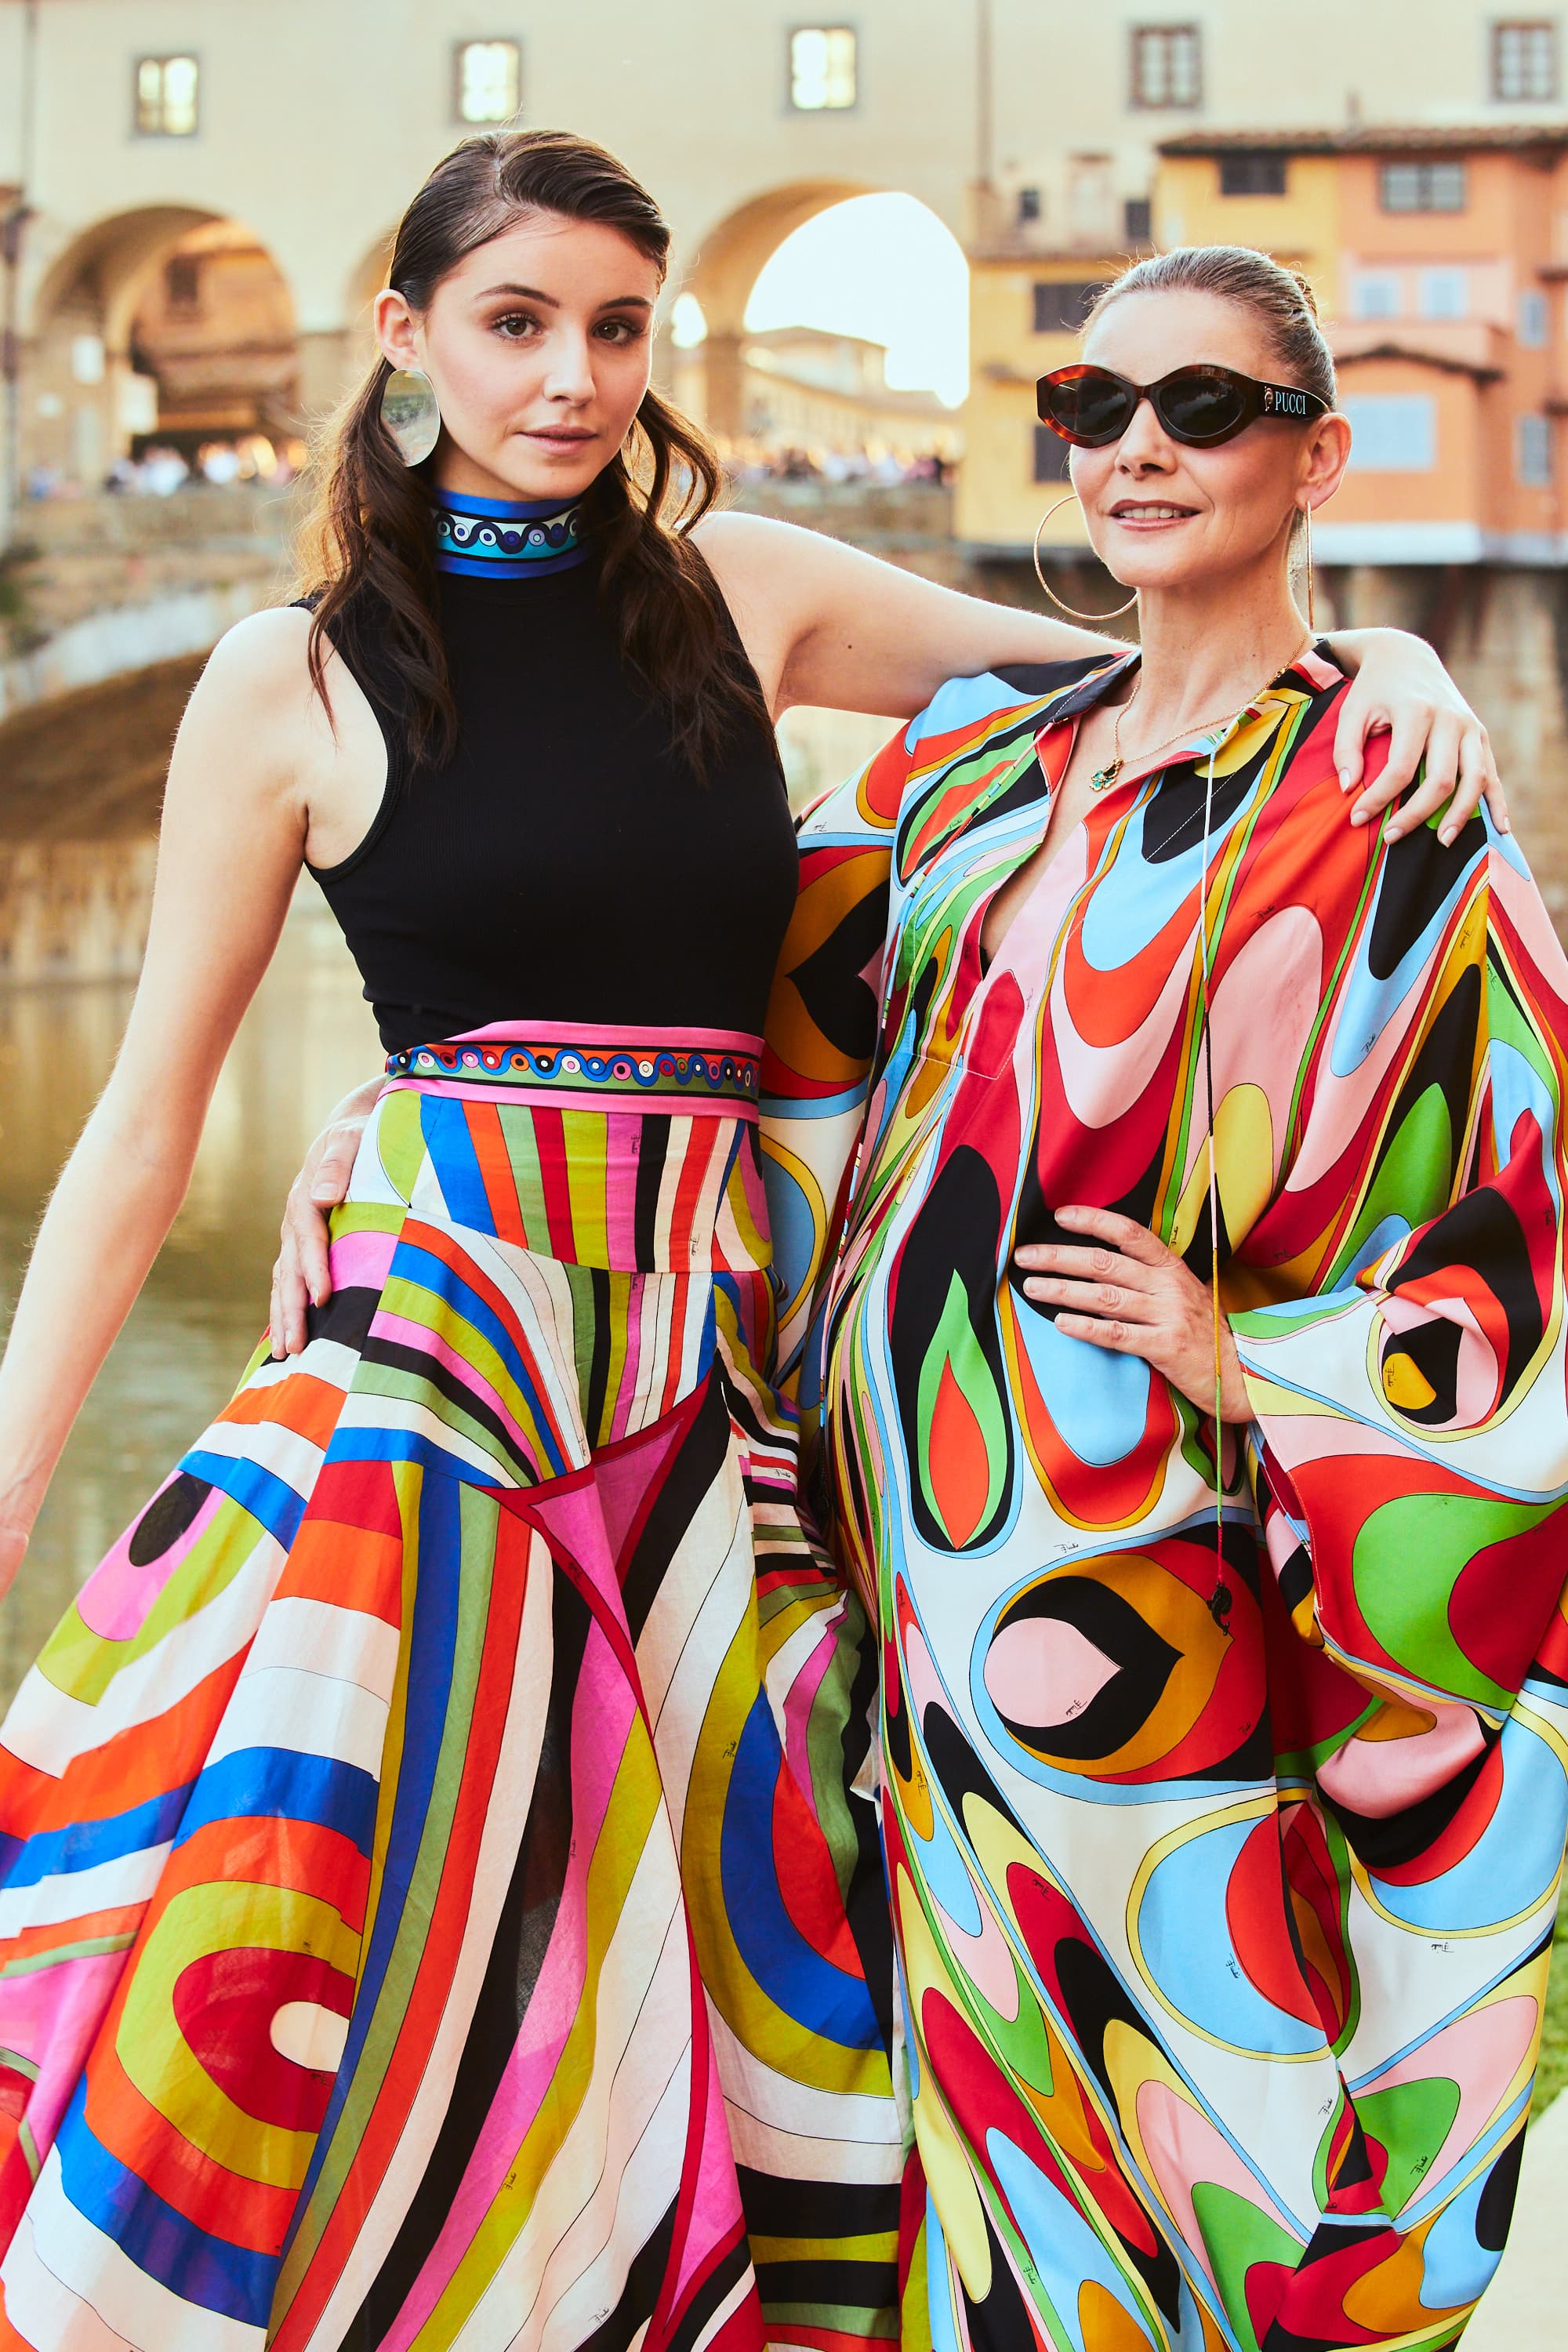 Emilio Pucci: The Rainbow Alternative for Milan Fashion Week - The